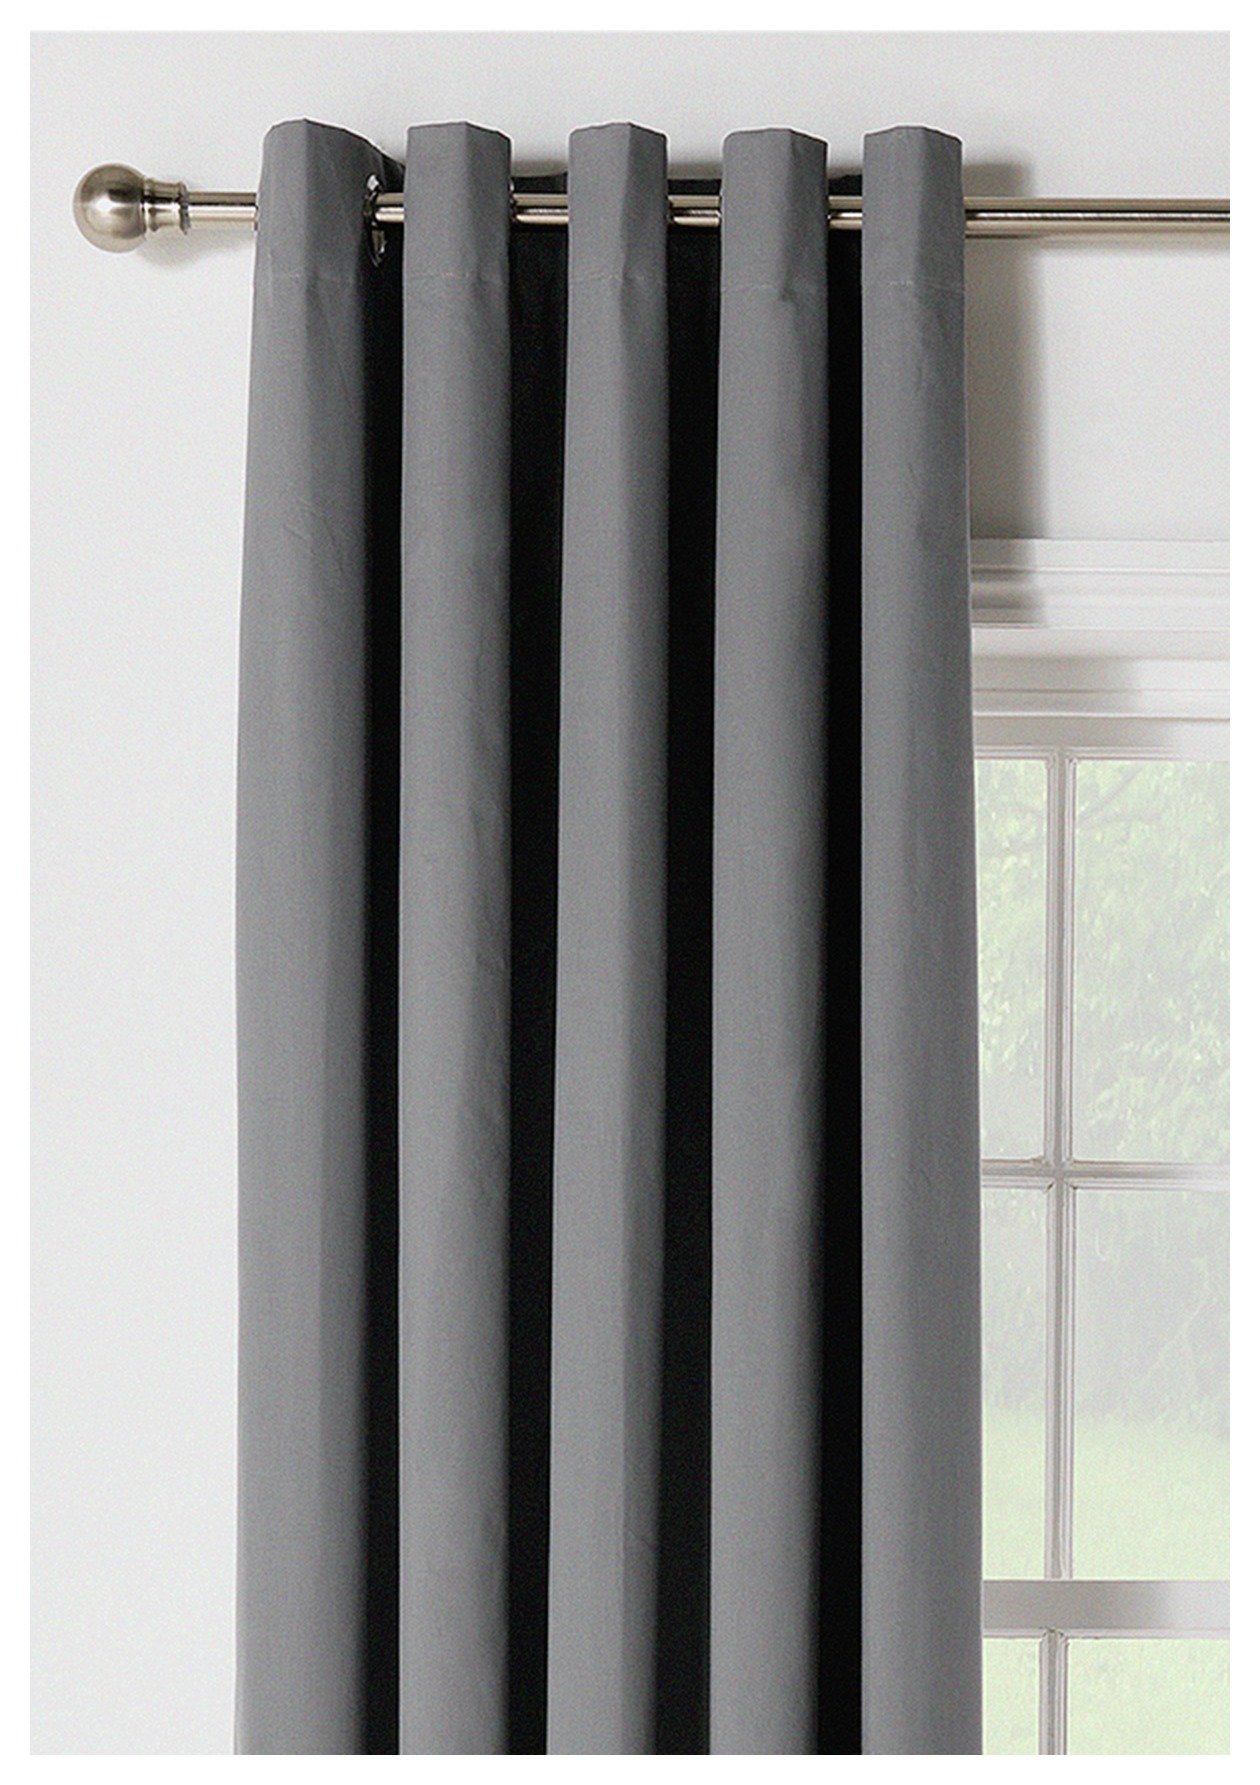 ColourMatch Blackout Curtains - 117x137cm - Flint Grey